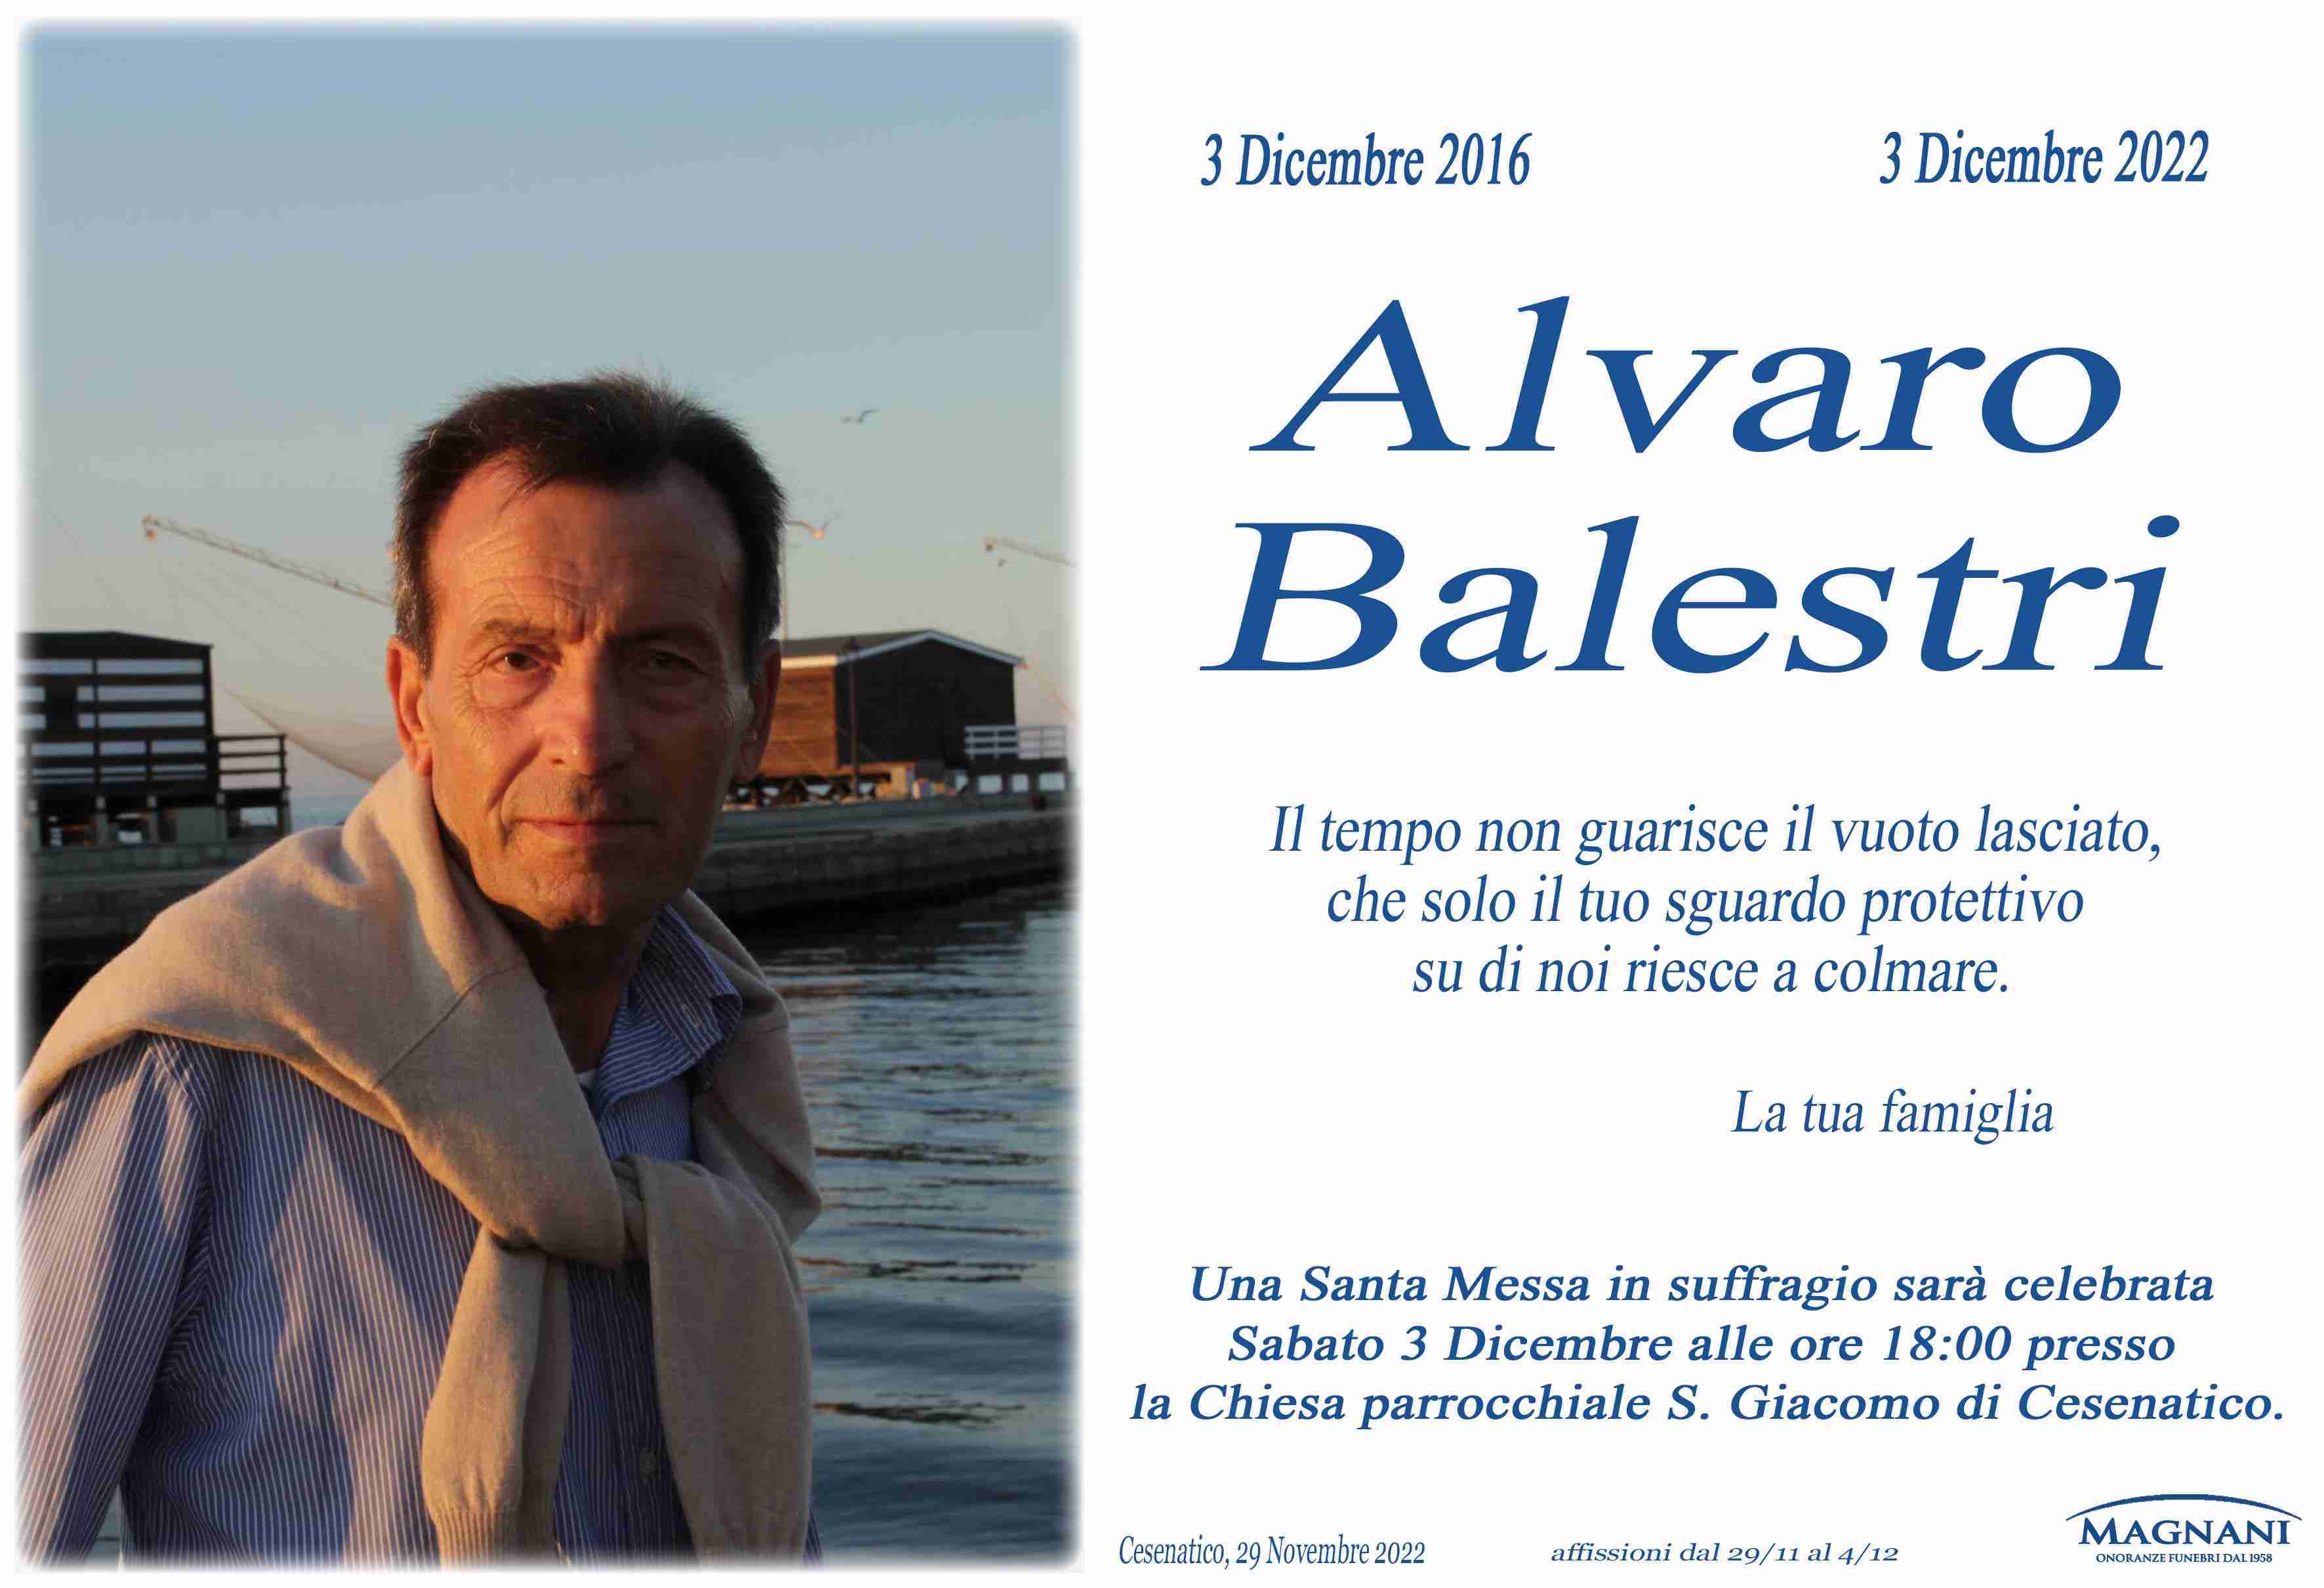 Alvaro Balestri